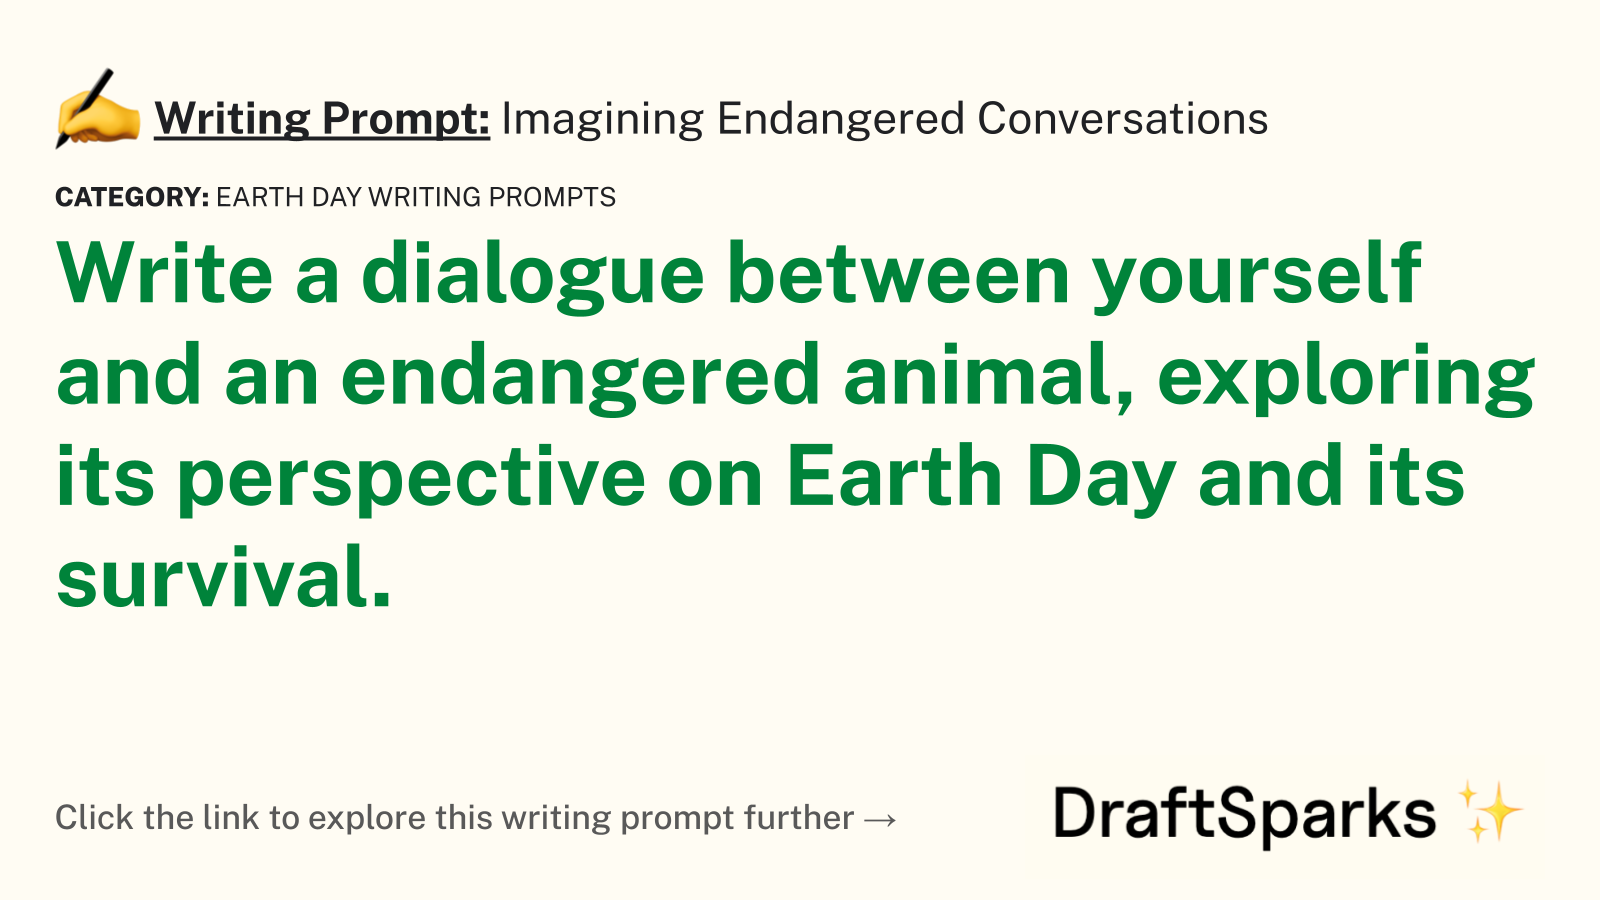 Imagining Endangered Conversations